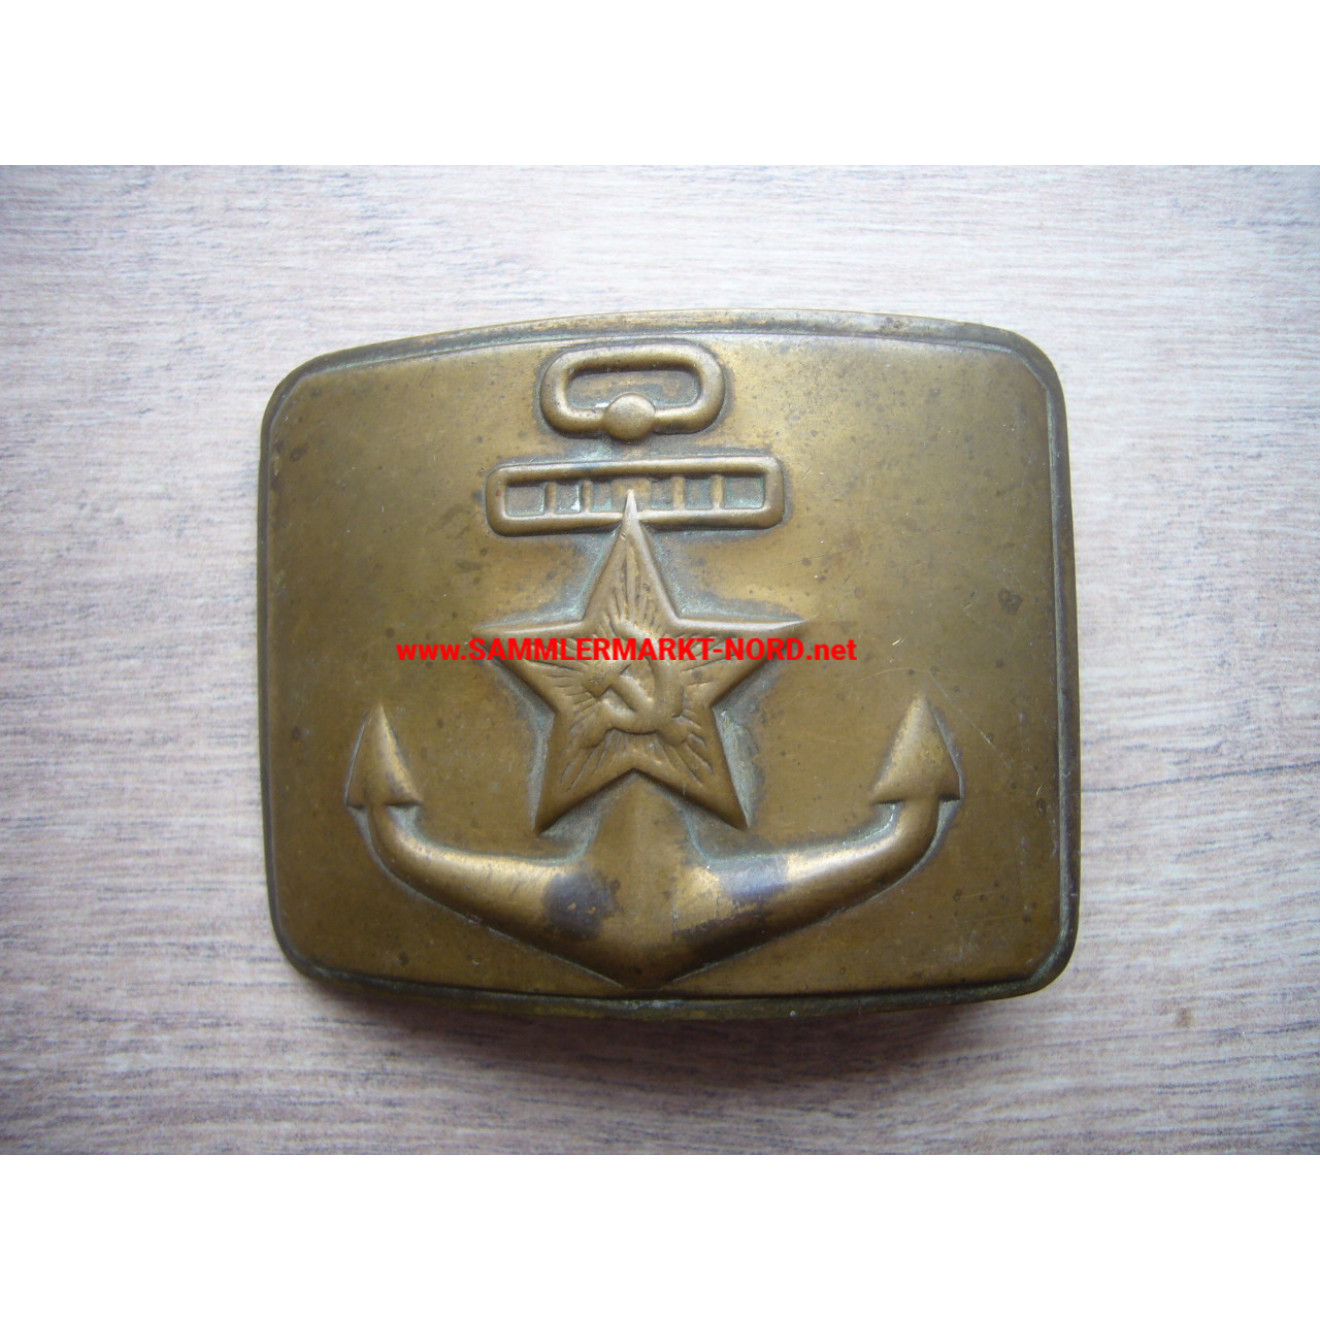 Russia / Soviet Union - Navy belt buckle (large), Sammlermarkt